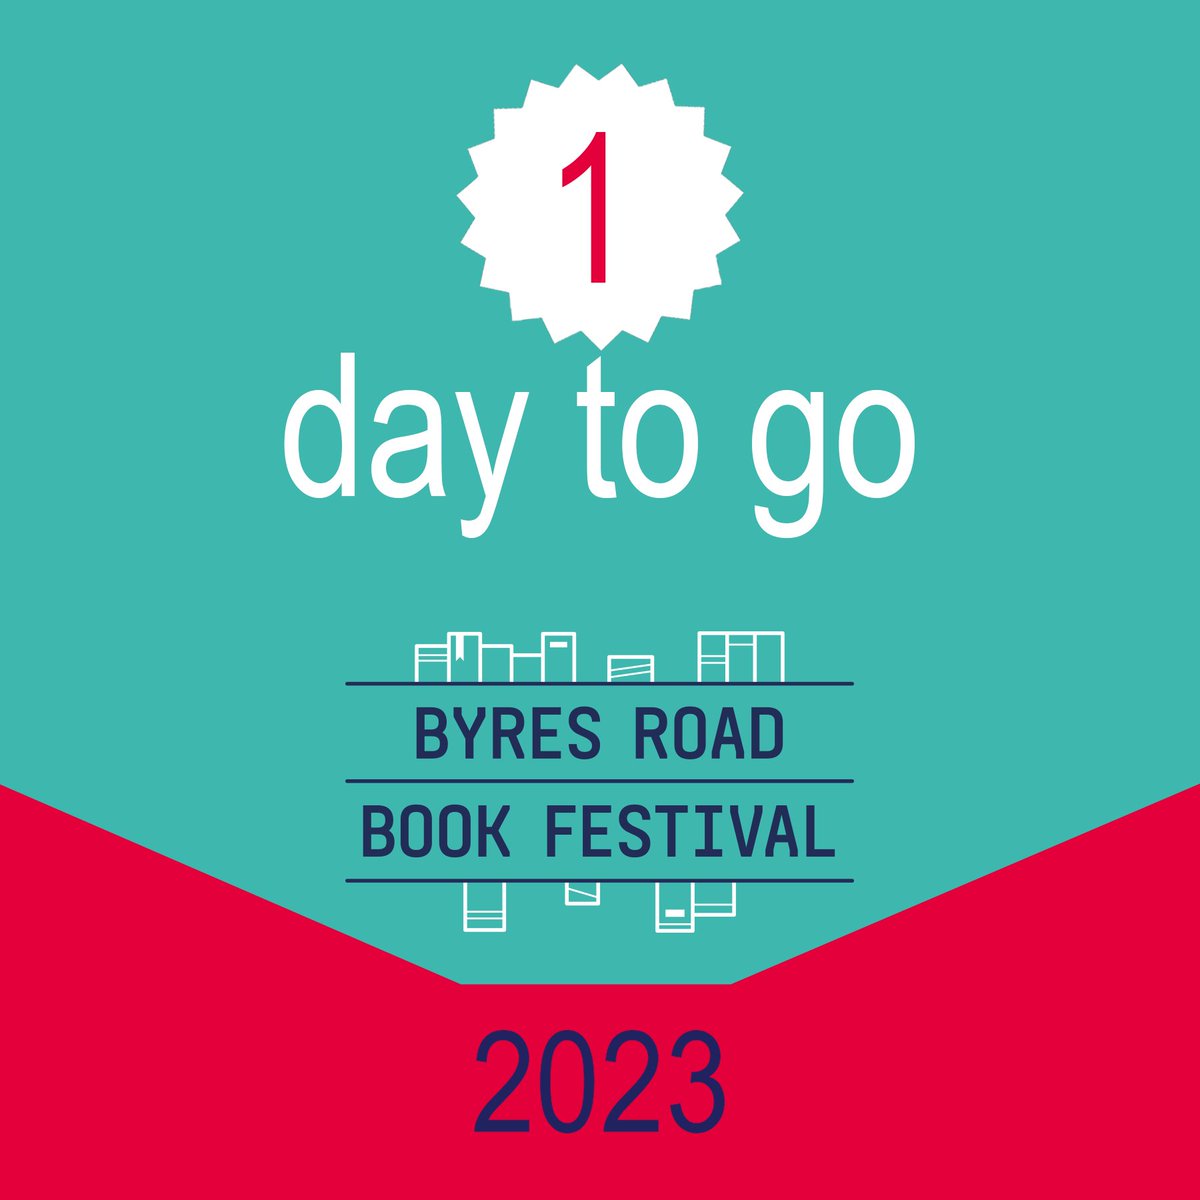 🎈
1 day to go!! 

Secure your last minute free tickets @ byresroadbookfestival.com 📚

@byresrdbookfest #byresroadbookfest